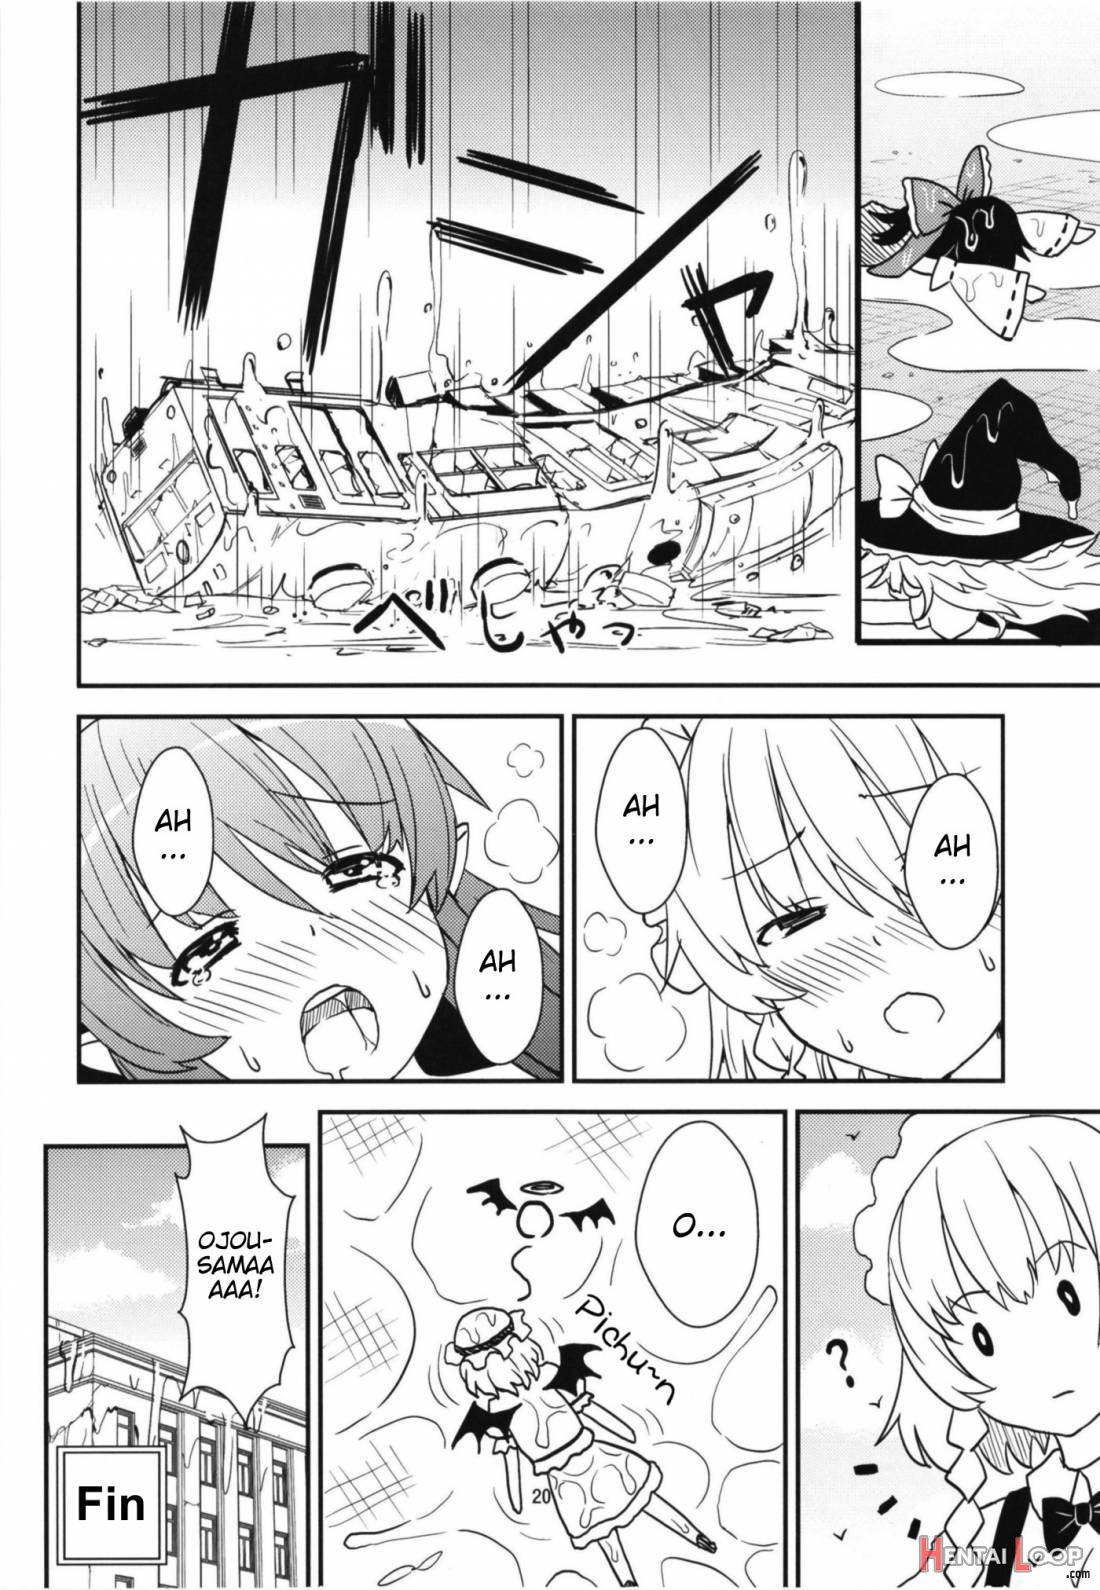 Mega Sakuya vs Giant Koakuma page 19